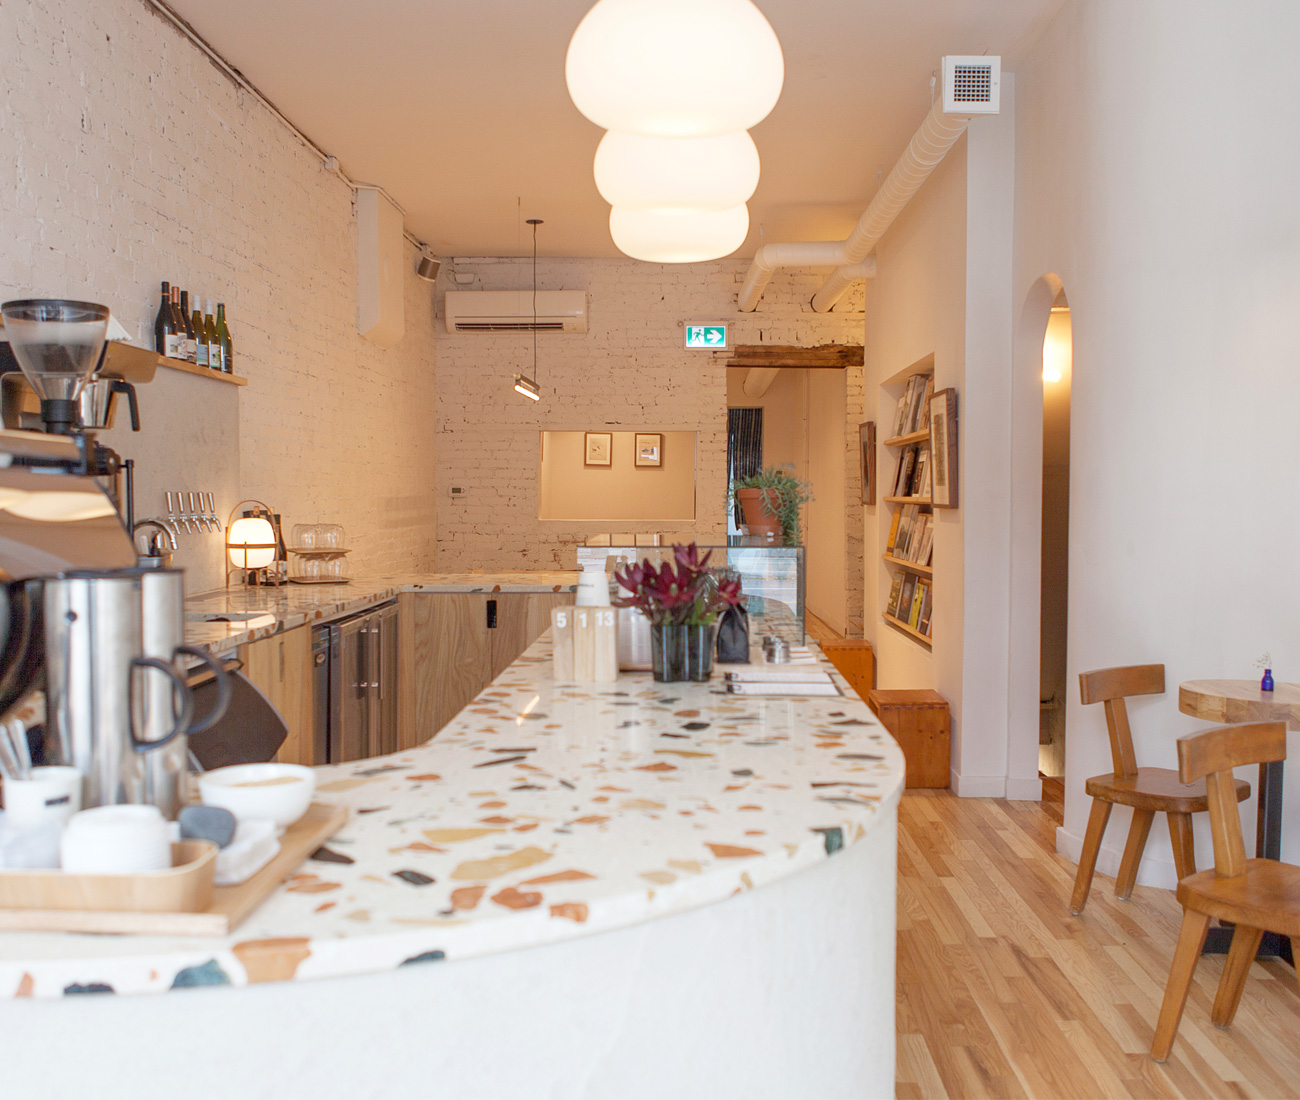 Hamilton cafe designed by Montreal architects Atelier Barda